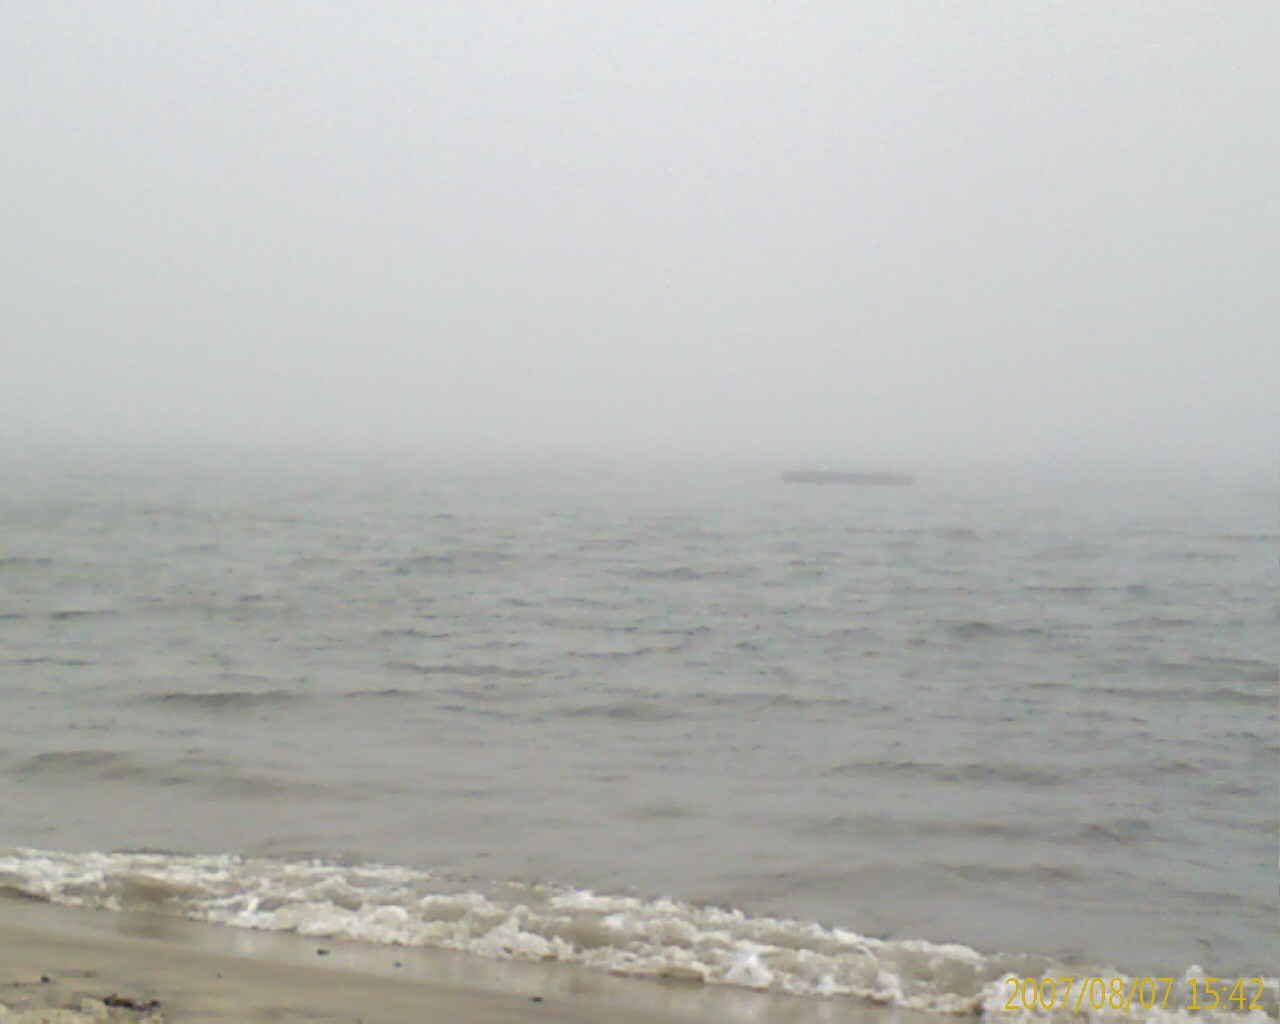 A foggy day at the beach